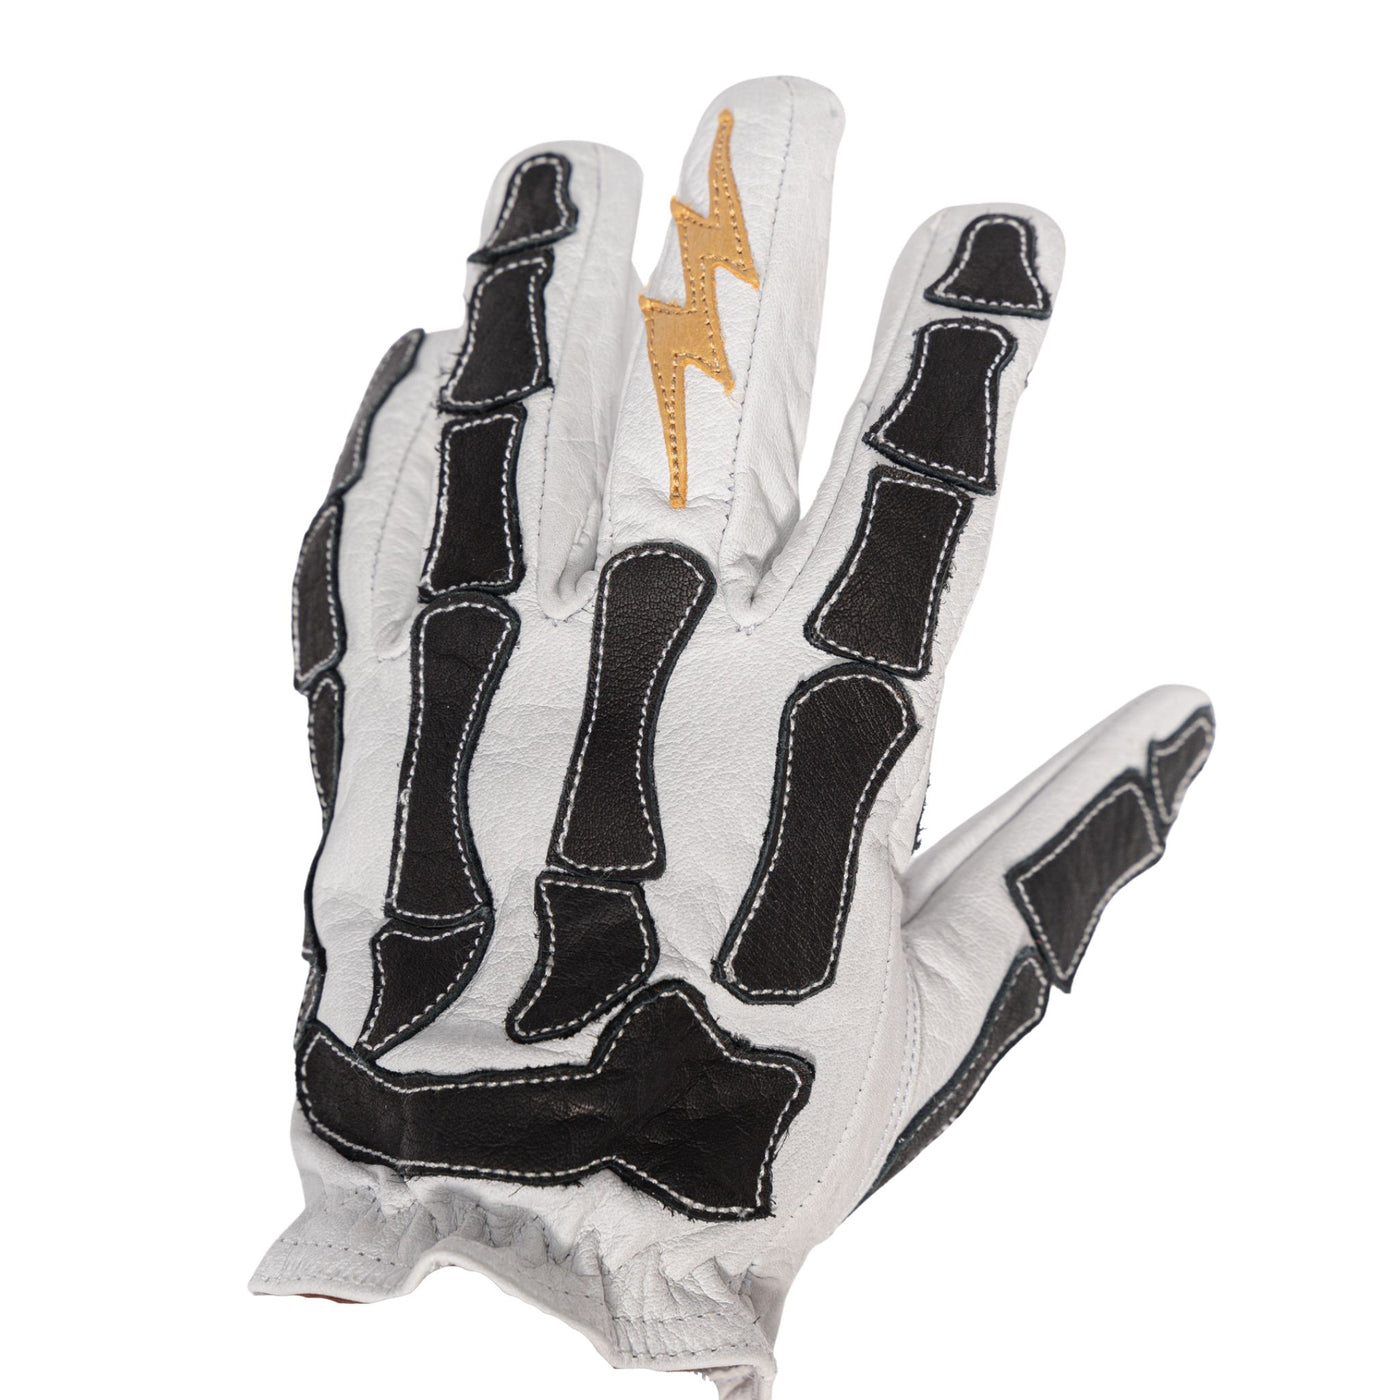 Astrapí (Lightning) Skeleton Leather Motorcycle Glove - White-Black